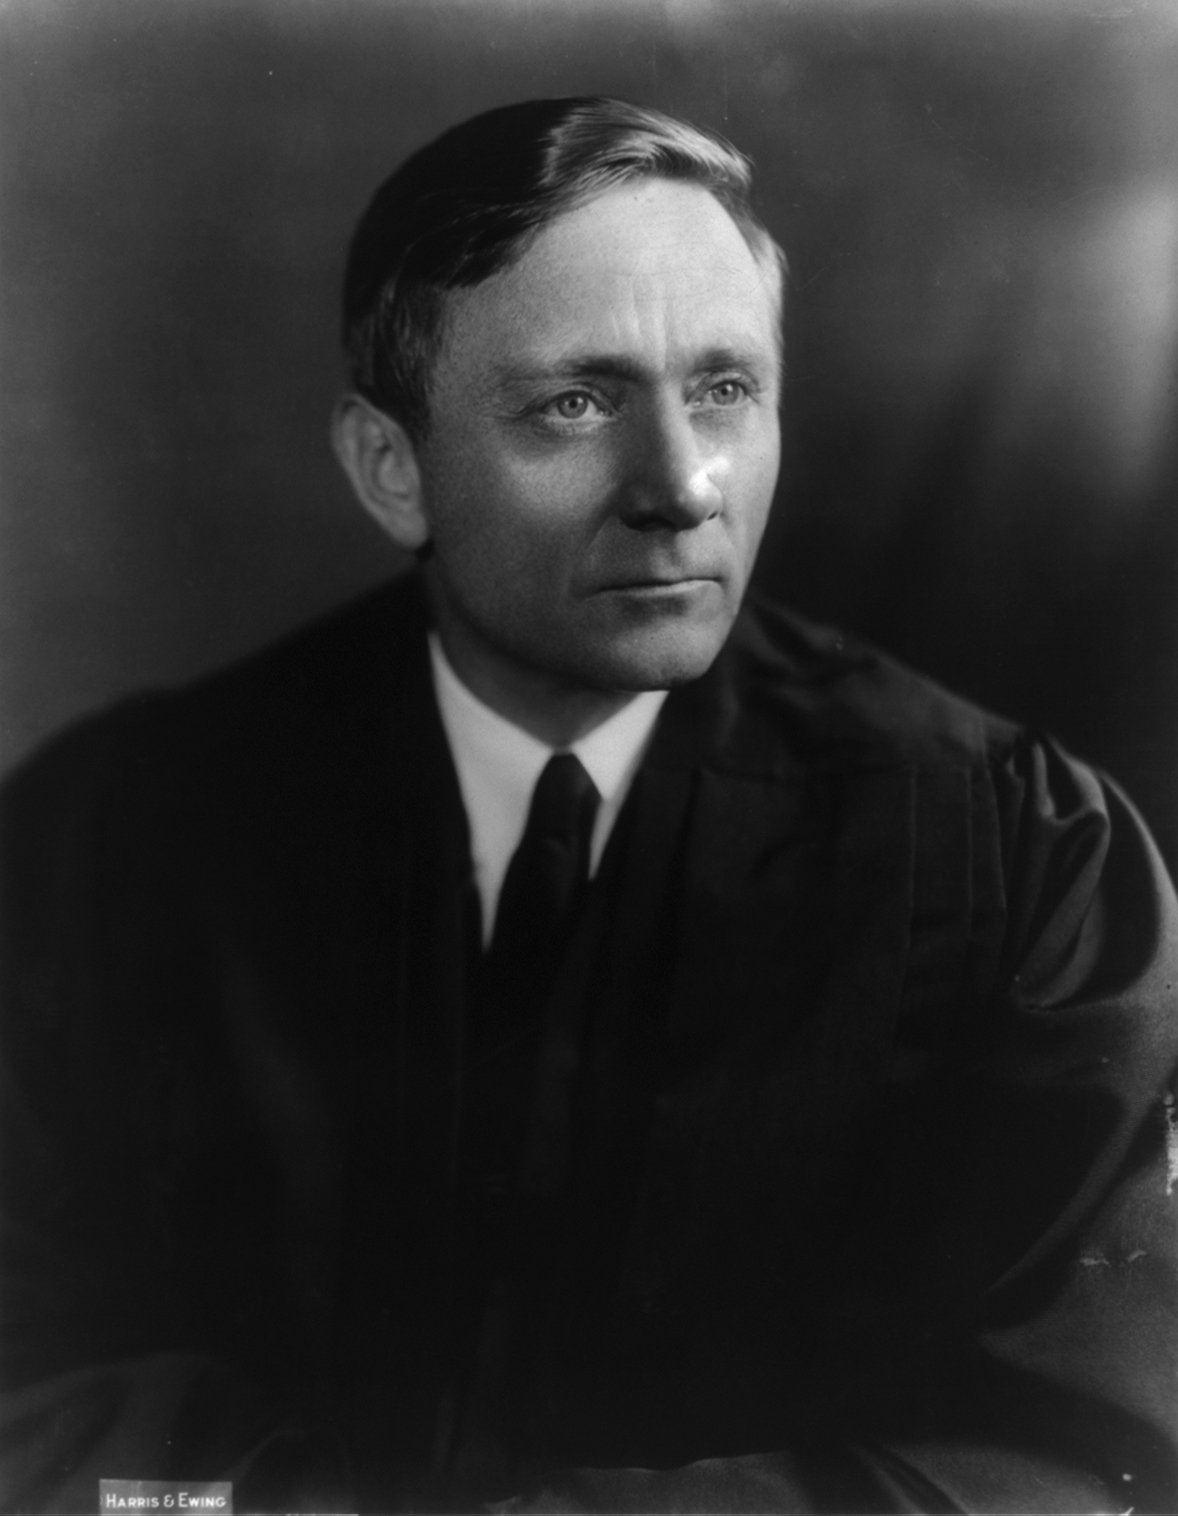 Justice William O Douglas